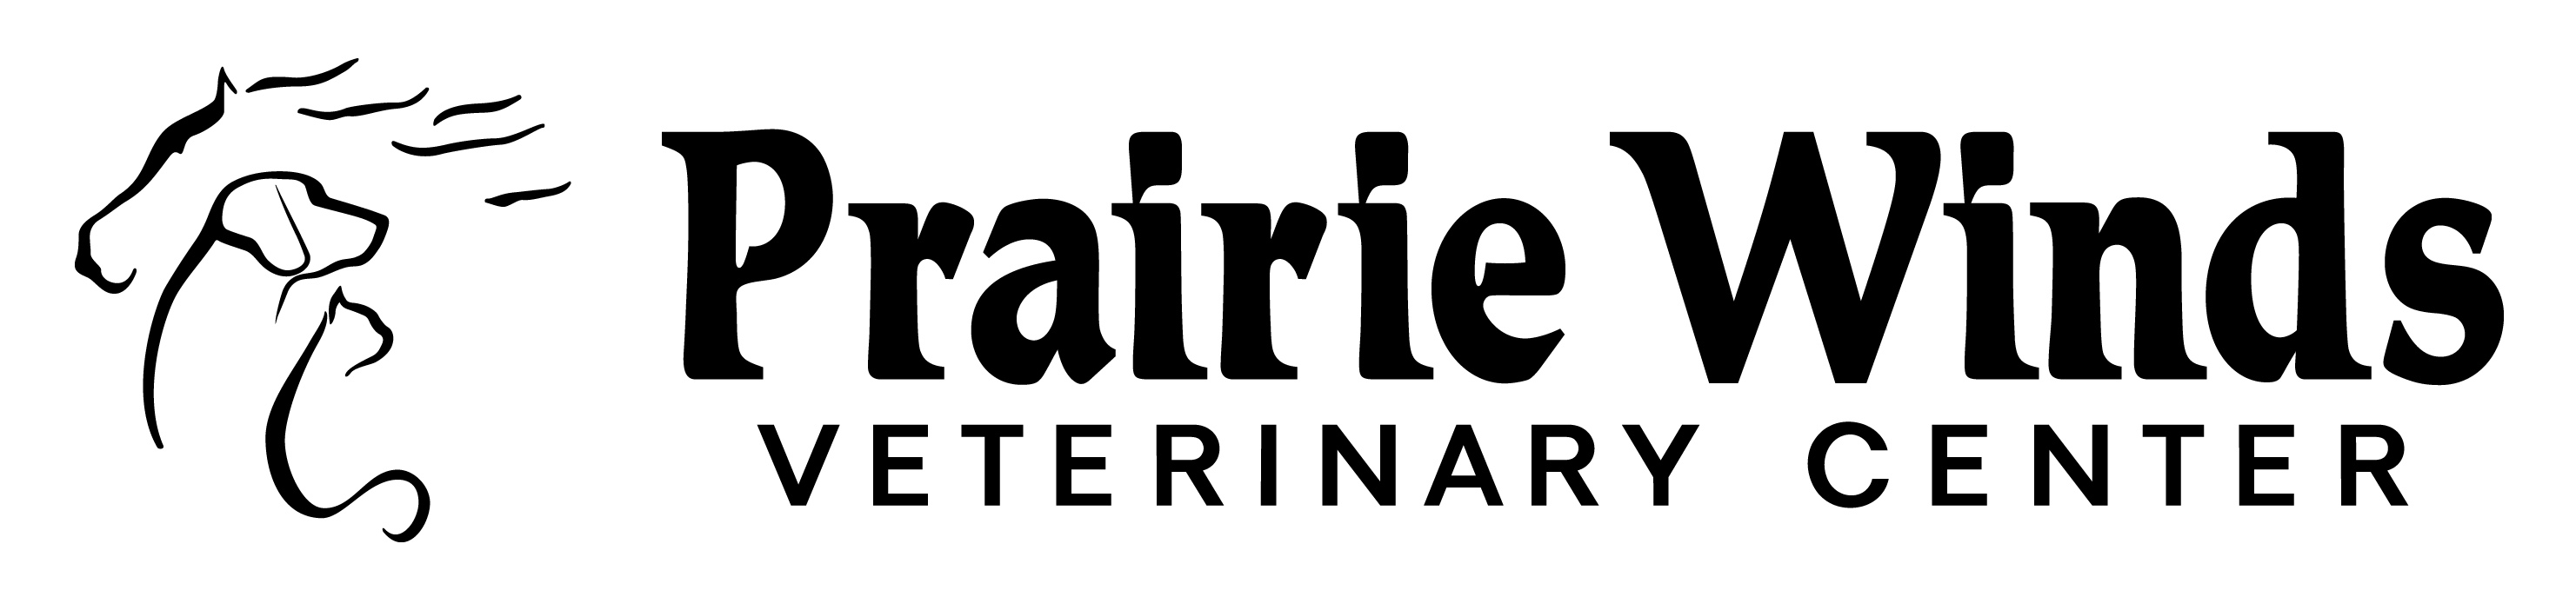 PrairieWinds_Logo